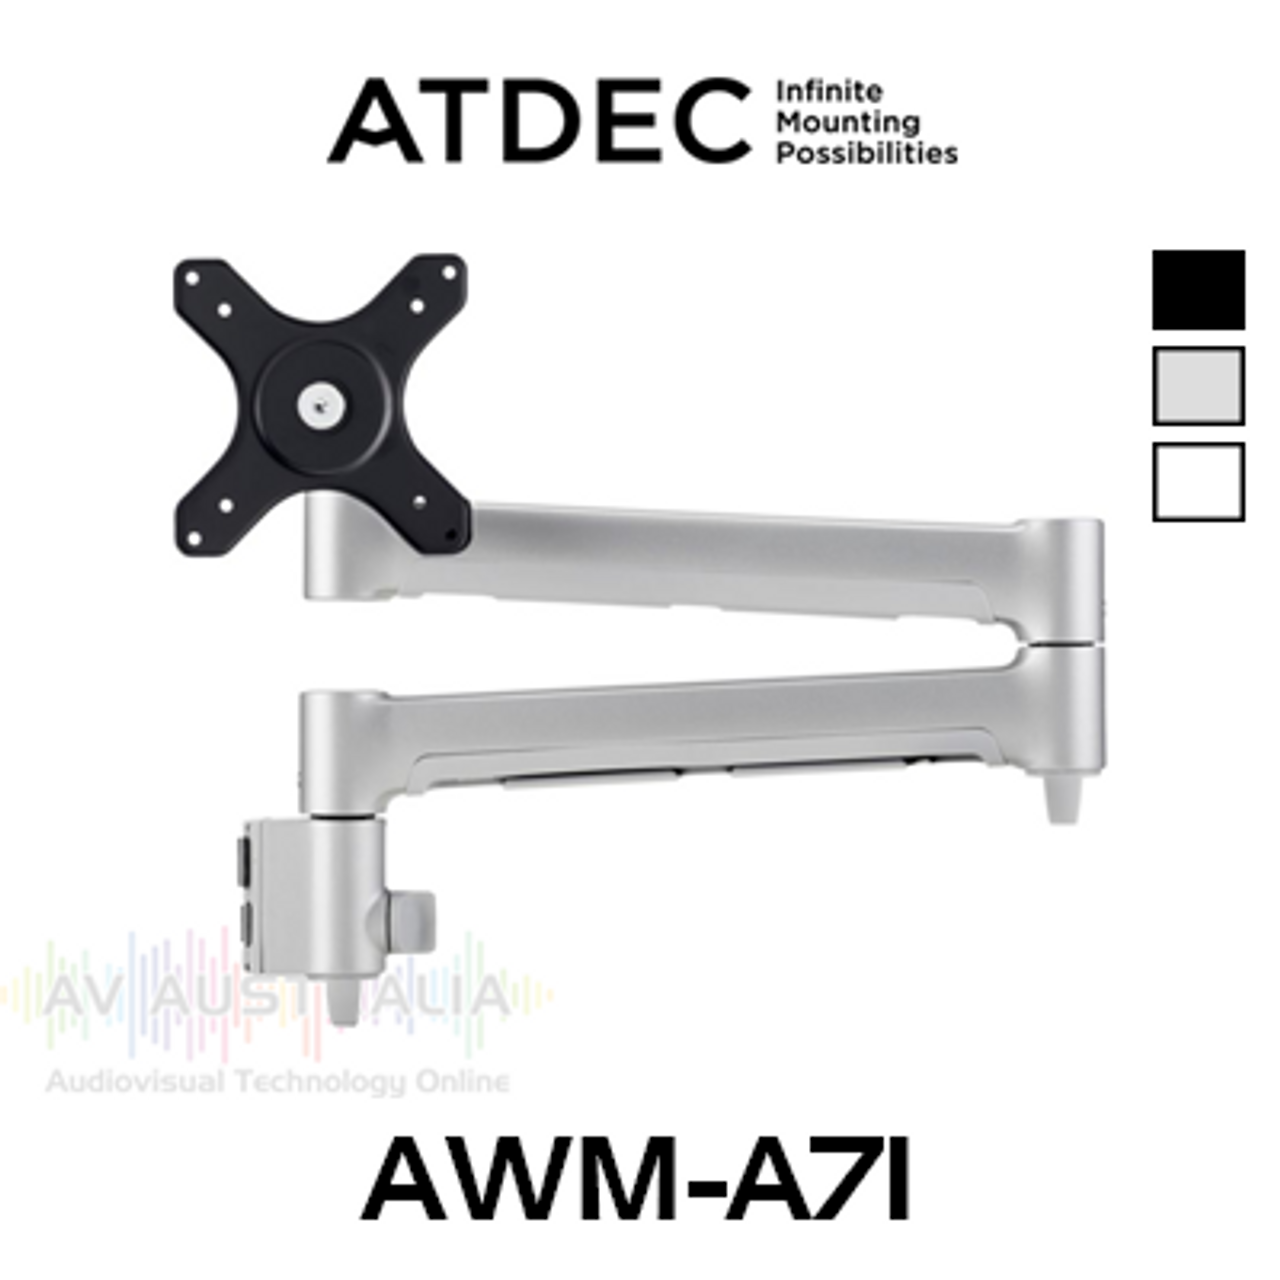 Atdec AWM-A71 710mm Monitor Arm For AWM Modular Mounts (9kg Max)